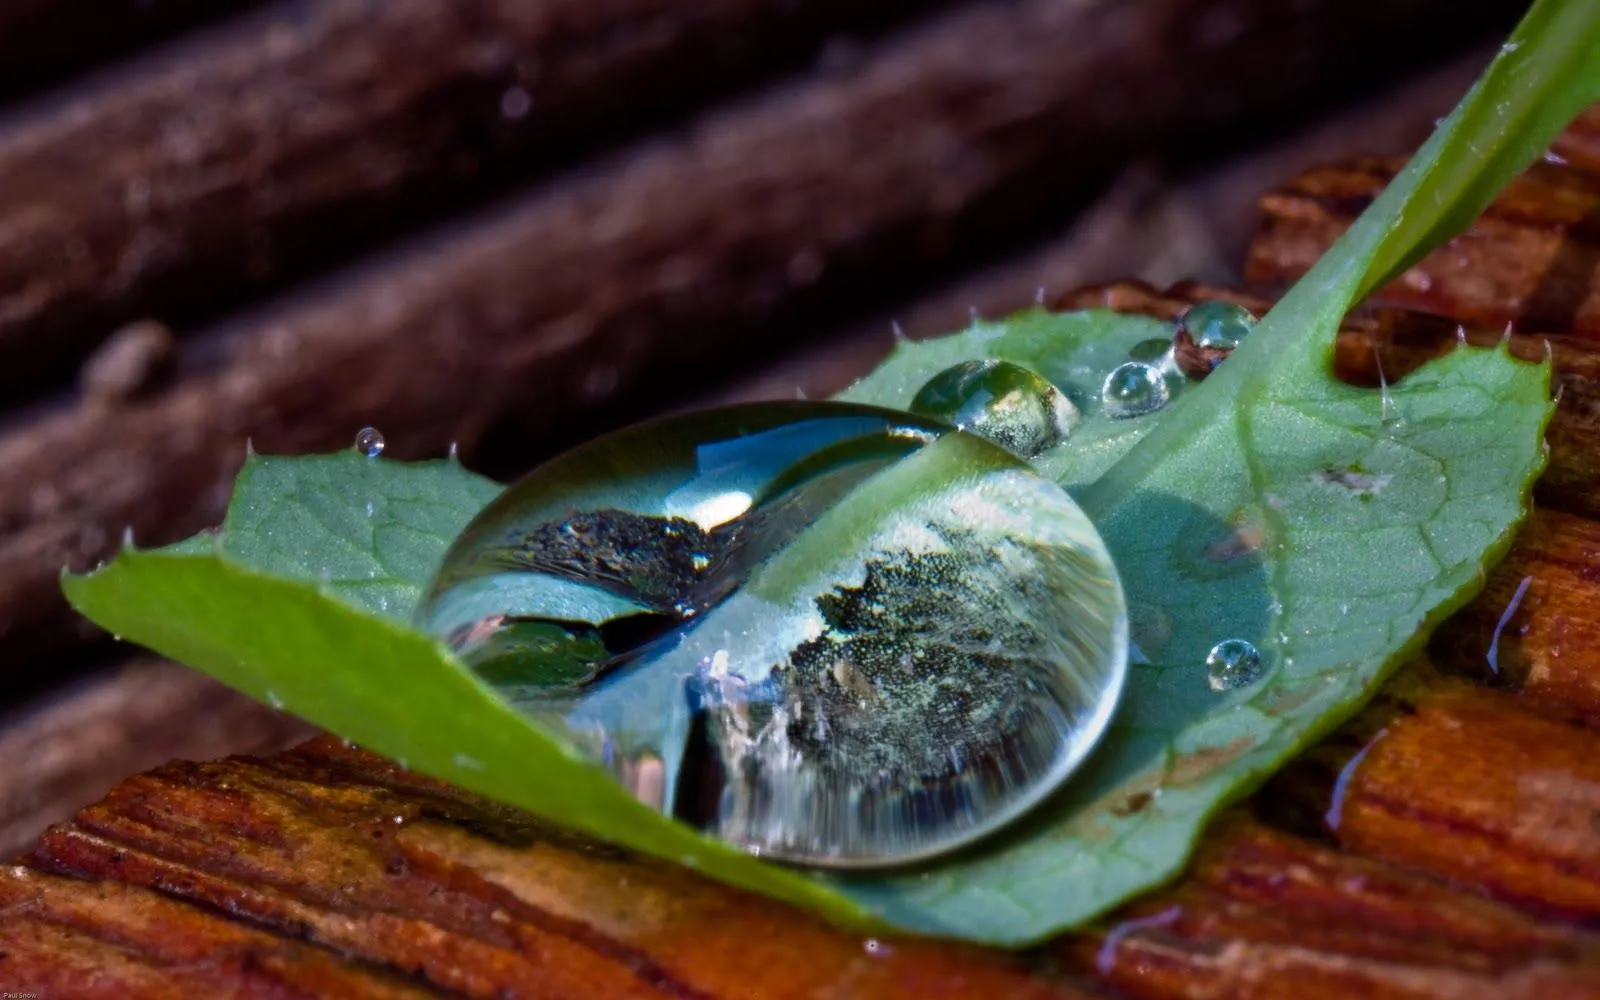 Hermosas Gotas de Agua en HD - Waterdrops HQ Images | FOTOBLOG X